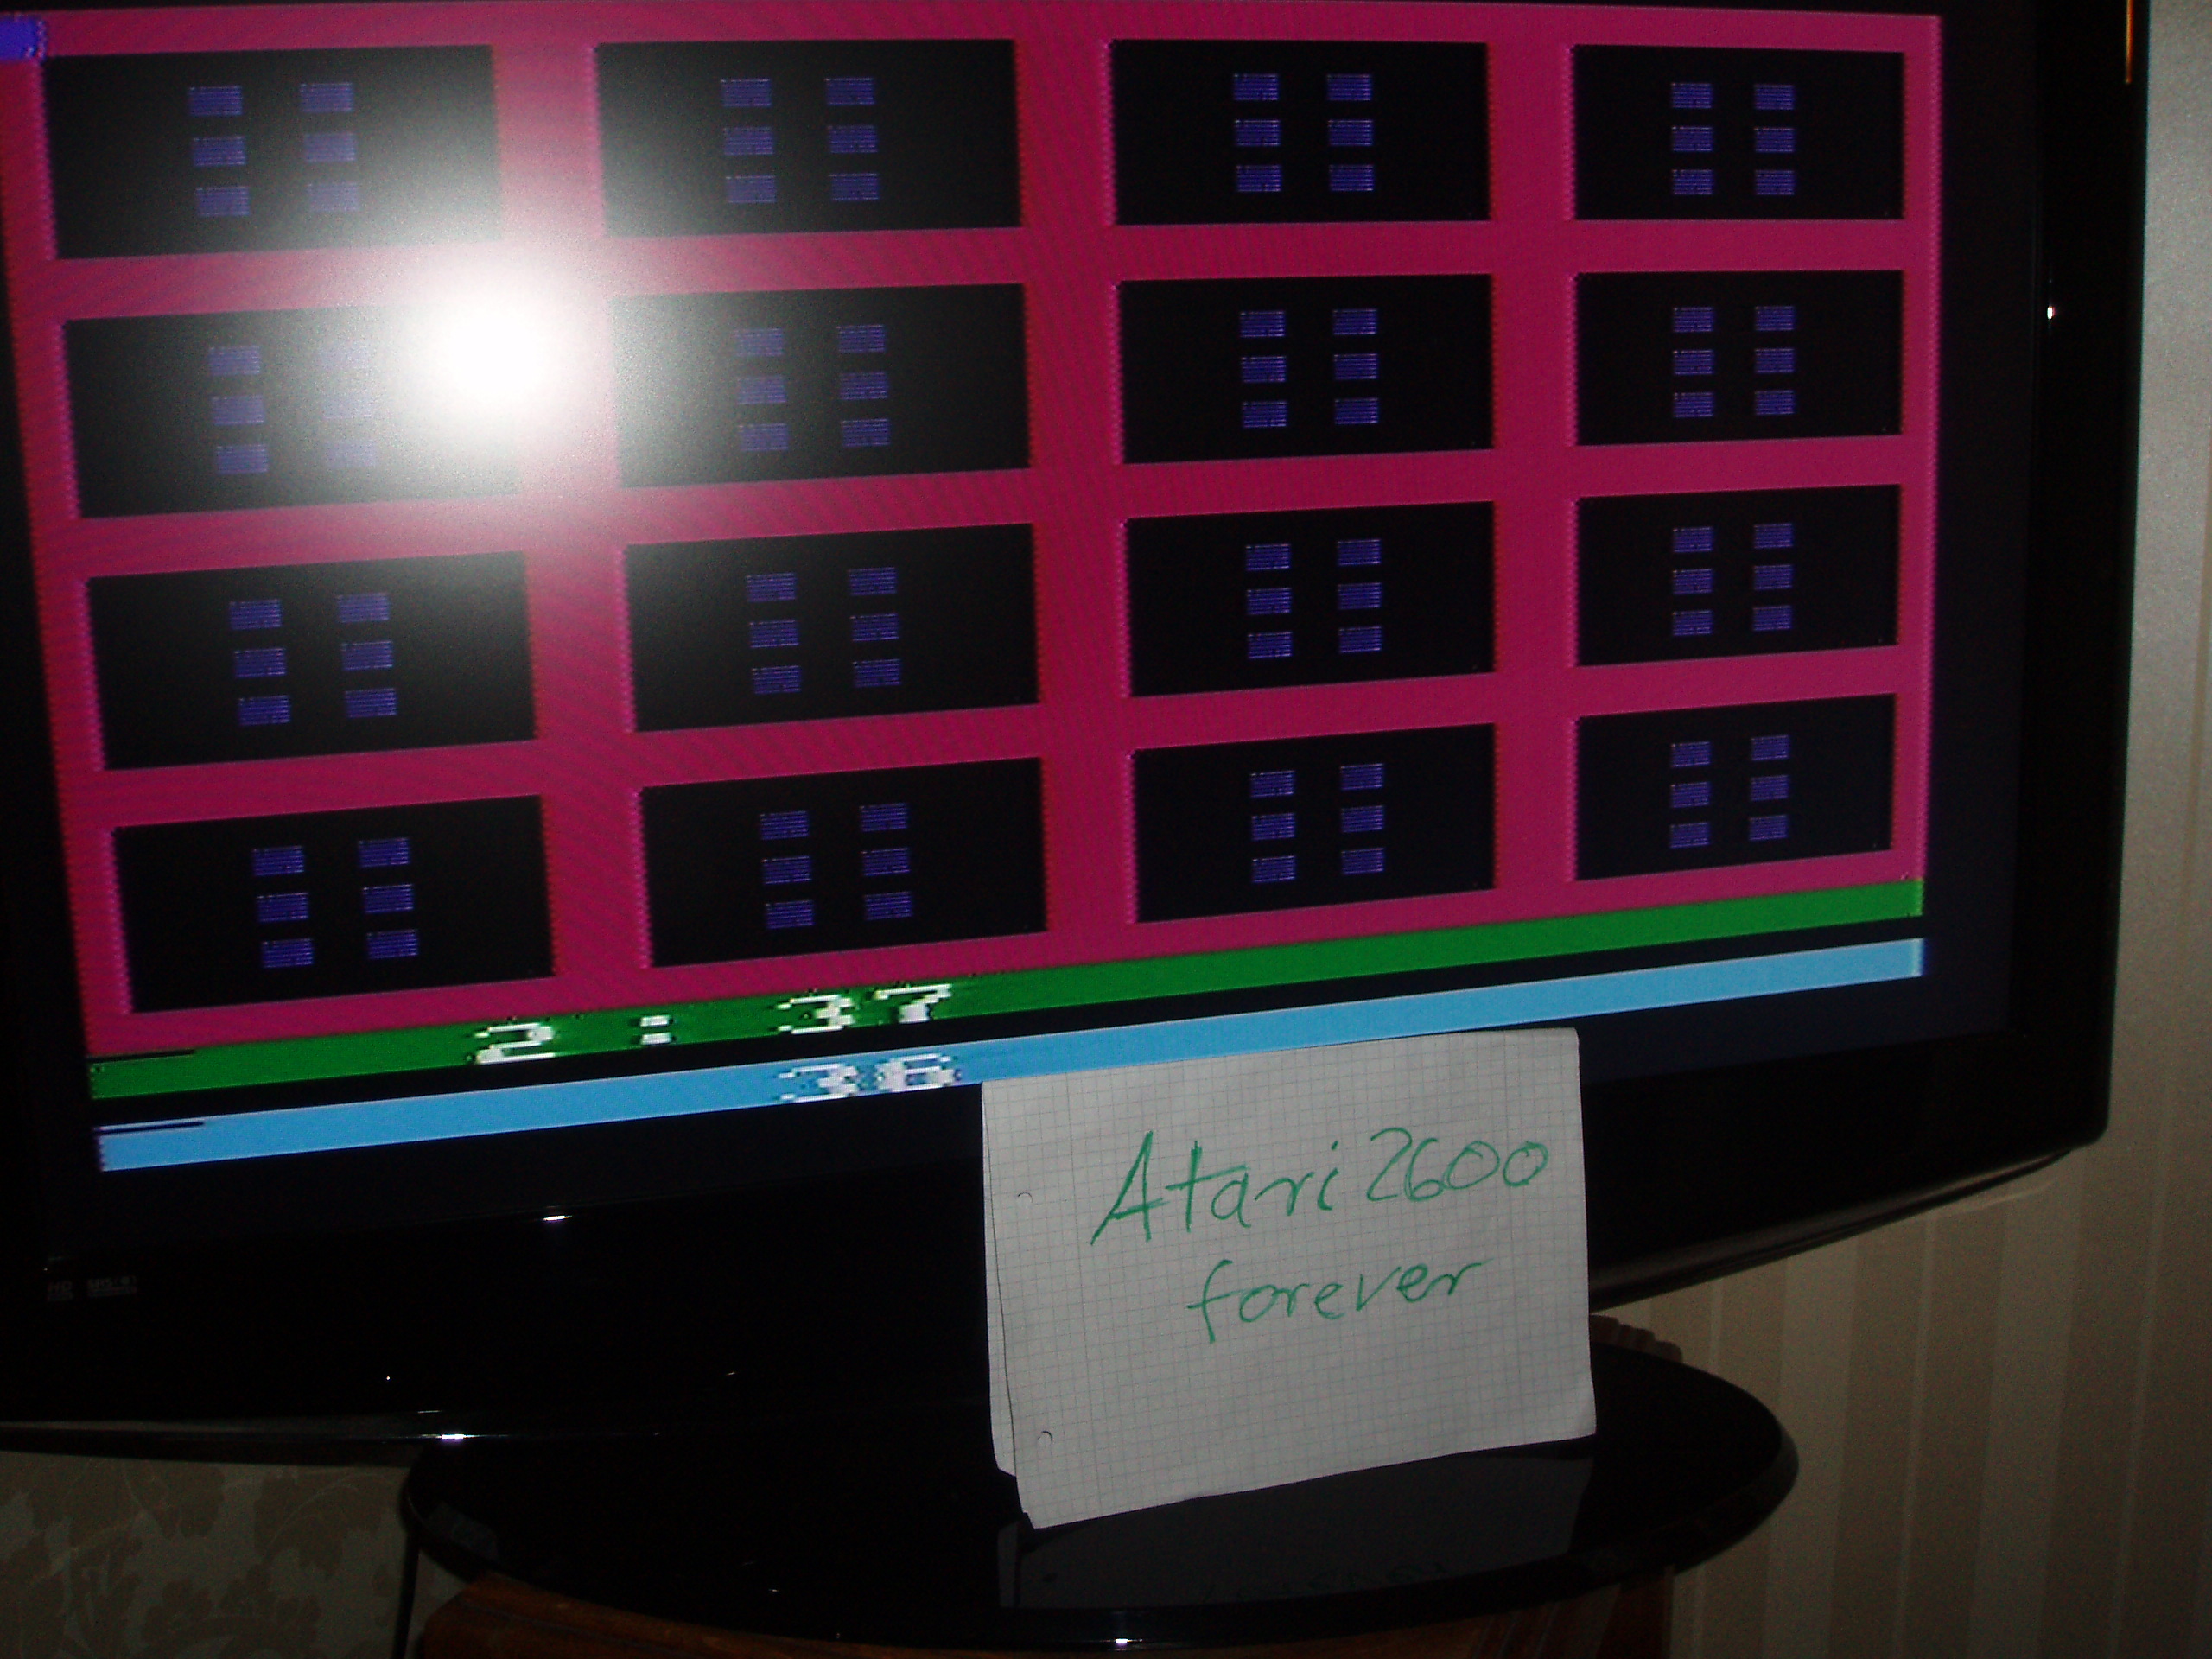 atari2600forever: Dice Puzzle (Atari 2600) 0:02:37 points on 2015-10-17 04:54:19